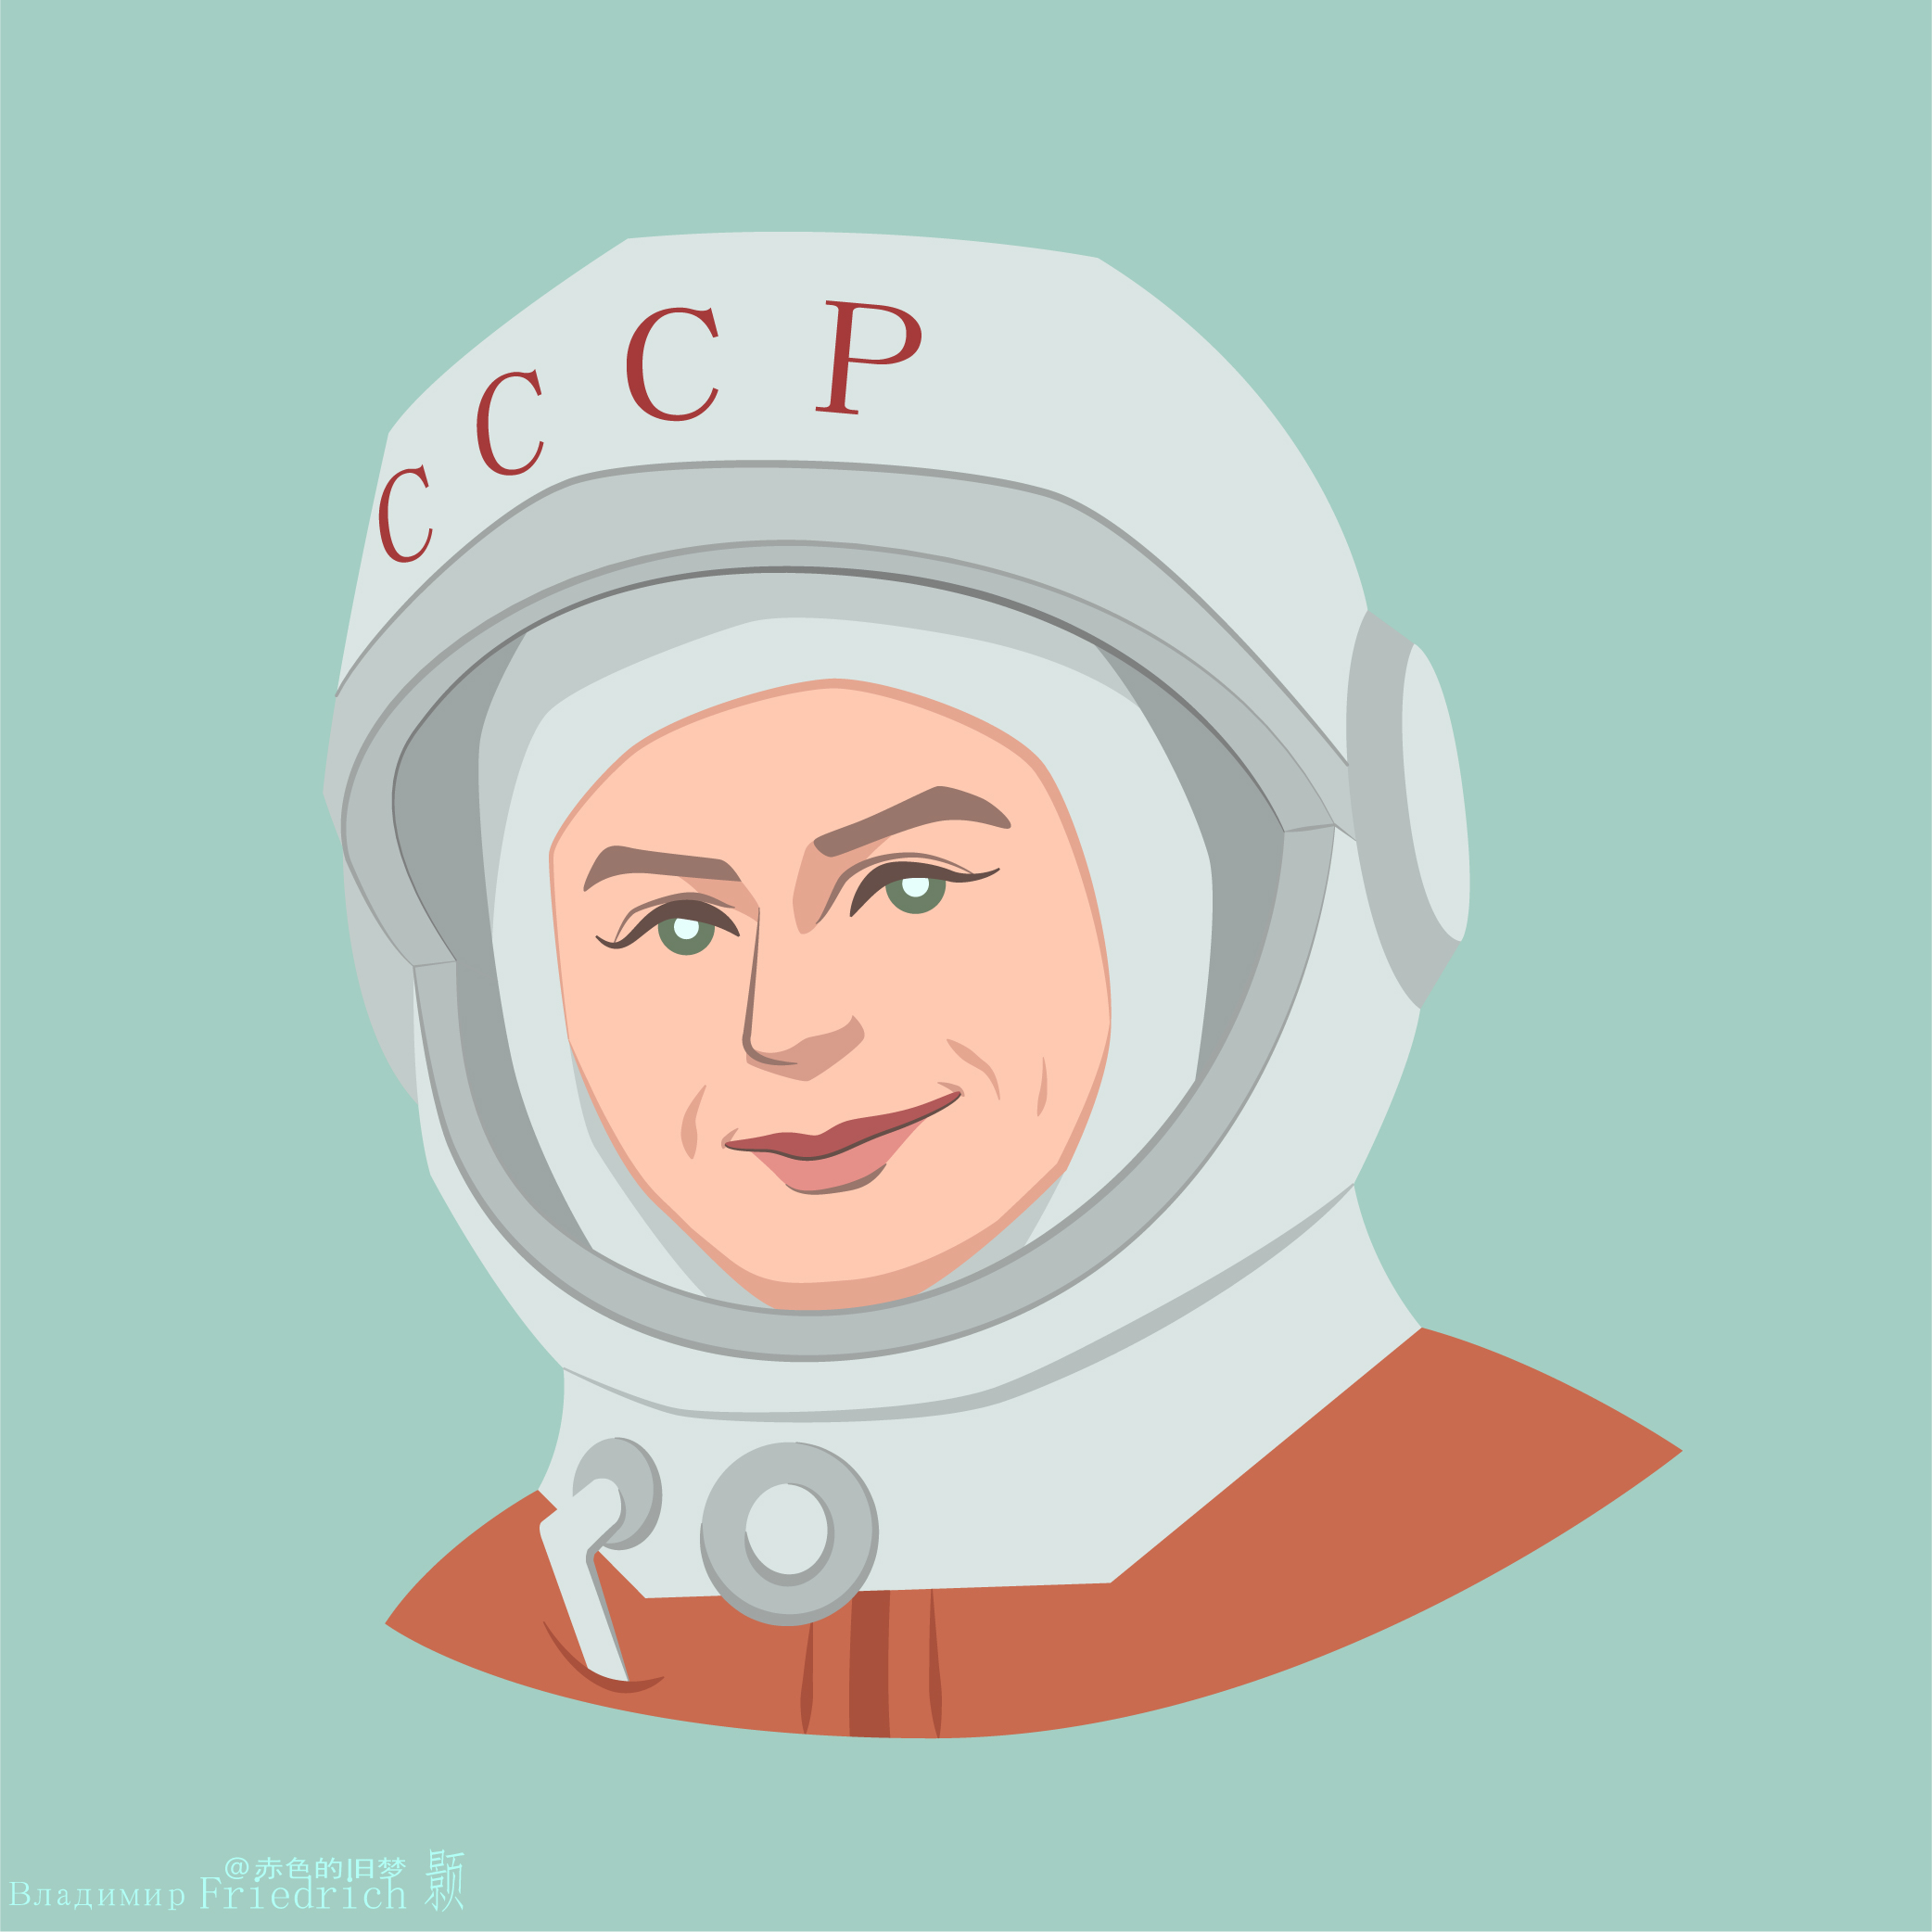 General 2084x2084 Flatdesign Valentina Tereshkova astronaut USSR simple background minimalism